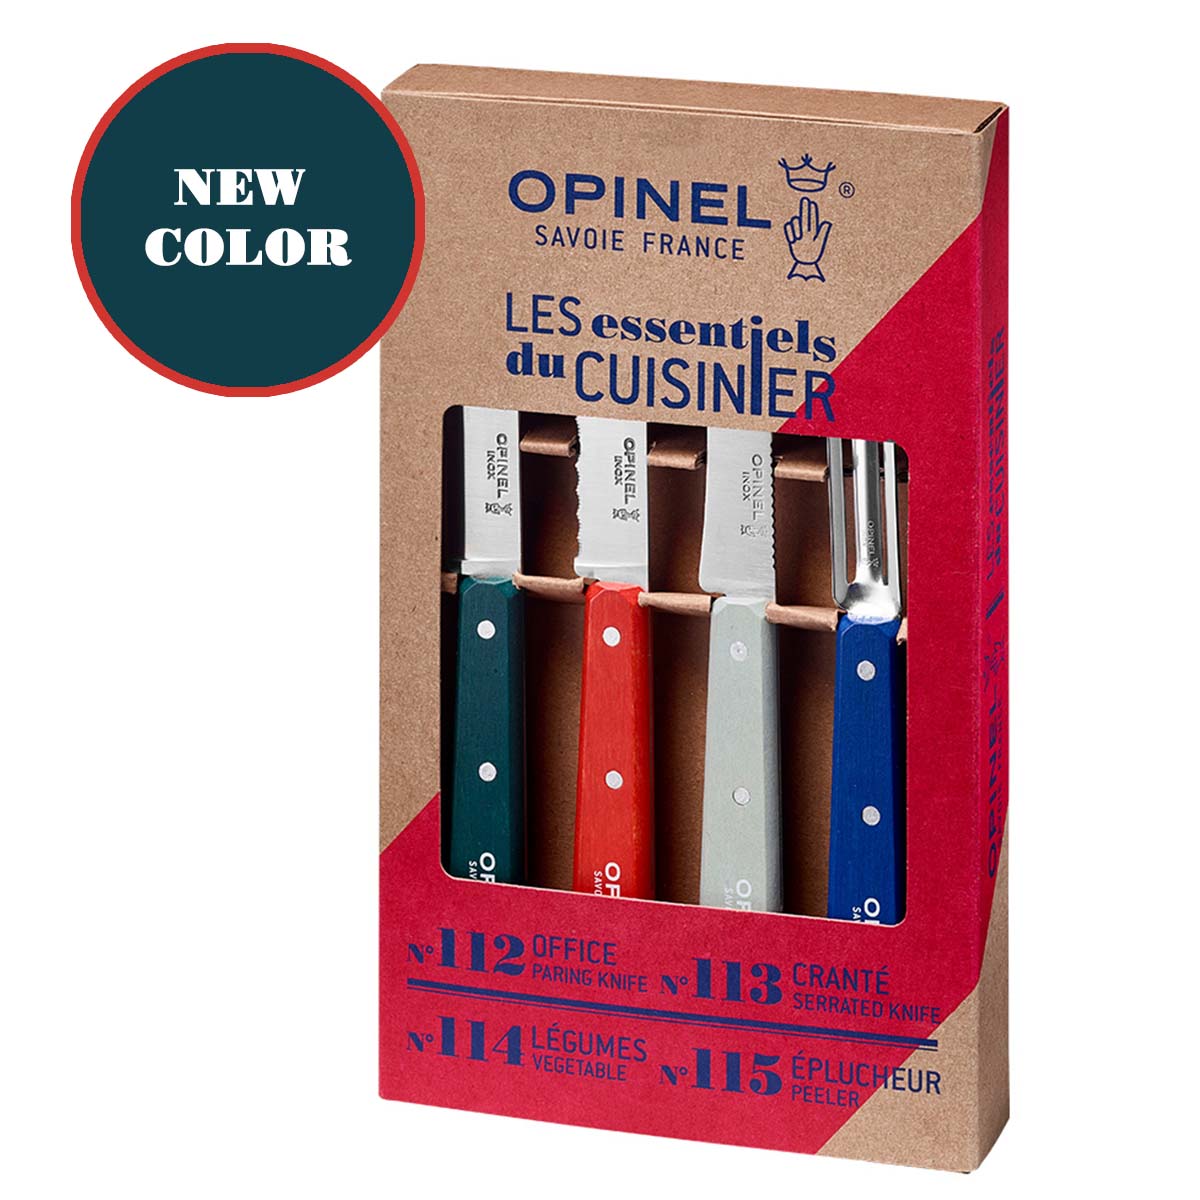 Opinel Knife Gift Box - OPINEL USA